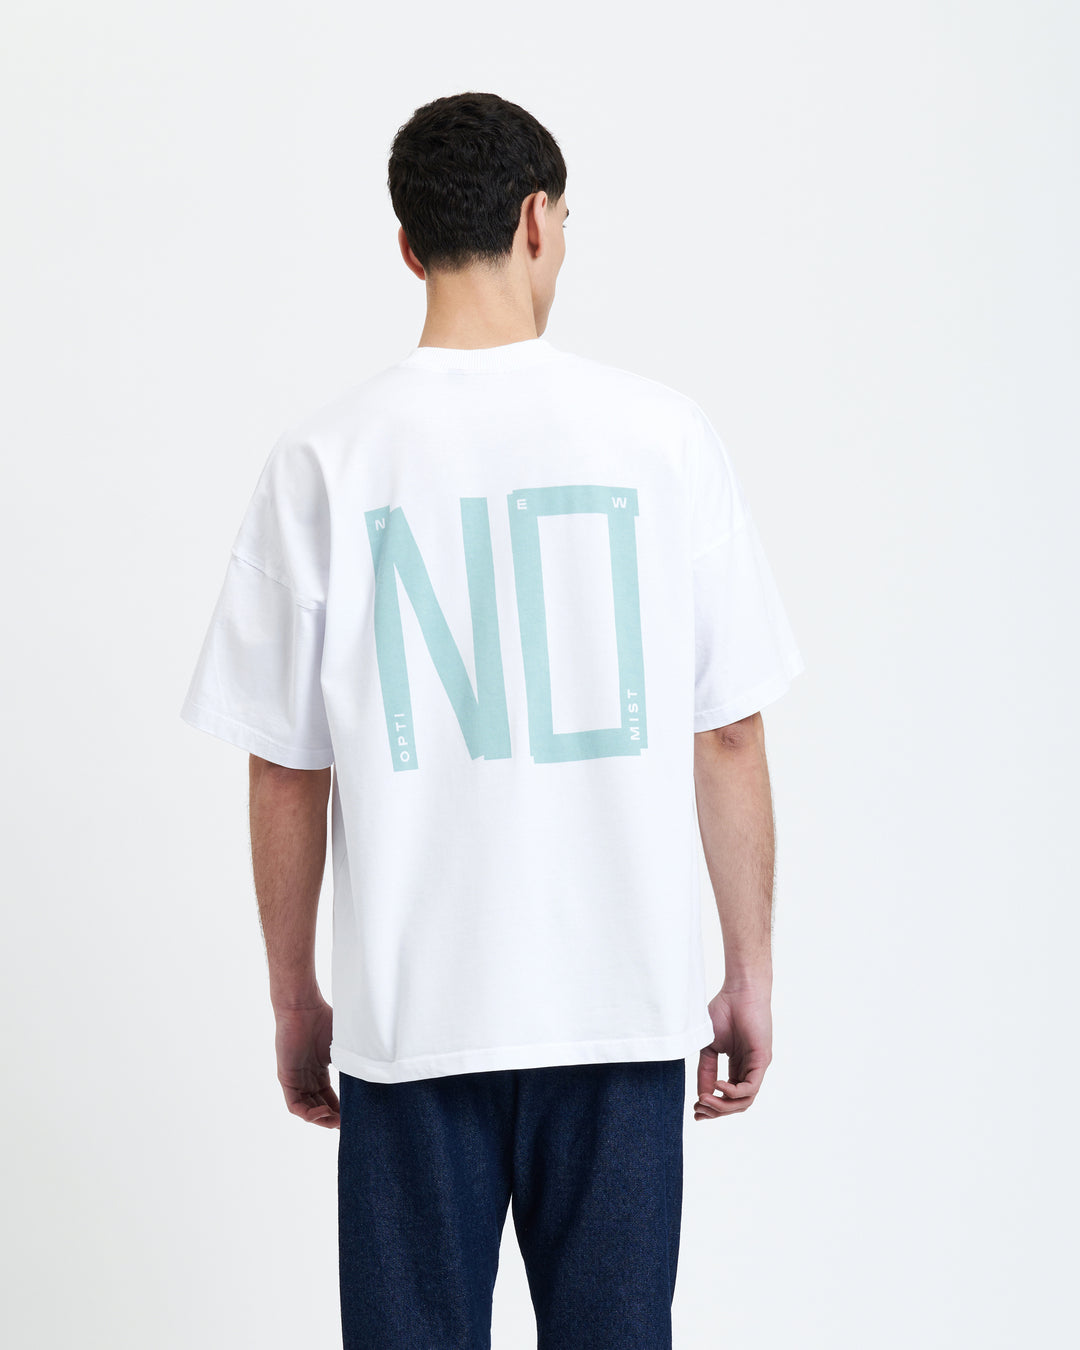 New Optimist menswear Spiaggia | Relaxed T-shirt statement print T-shirt